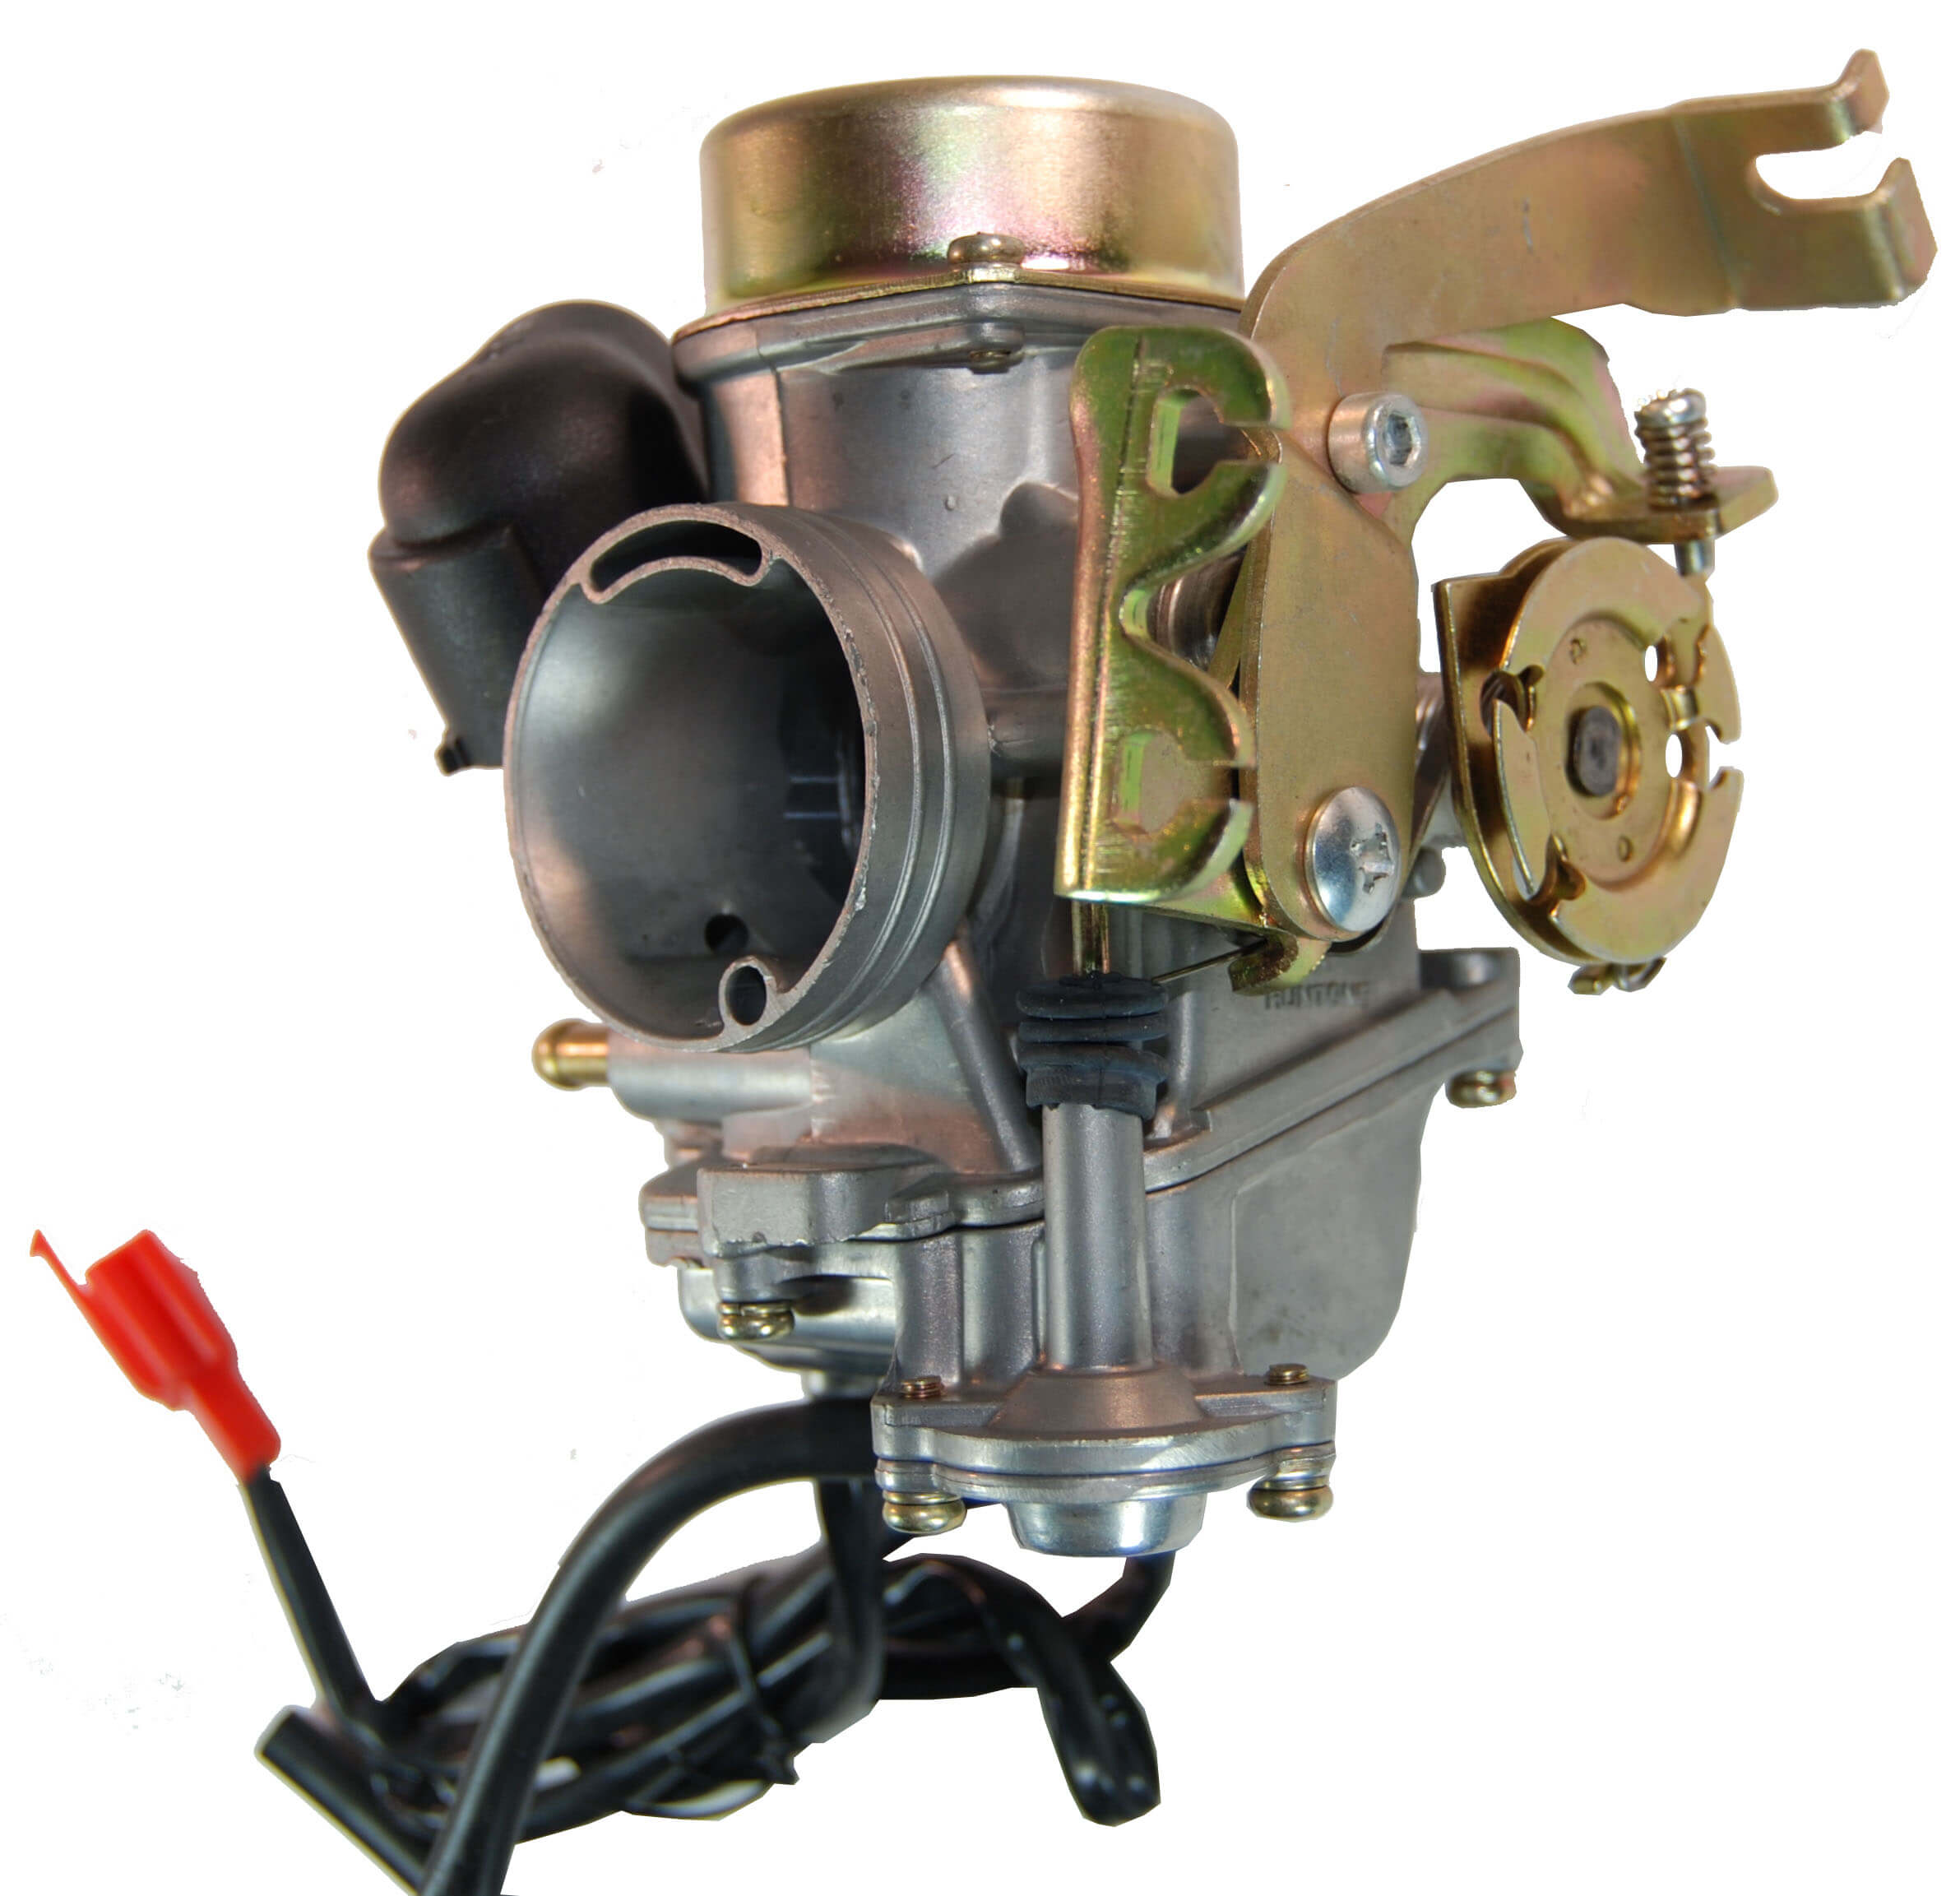 PD31 Carburetor 250-300cc With Pump and Electric Choke Intake ID=30mm Intake OD=36mm / Air Box OD=46mm